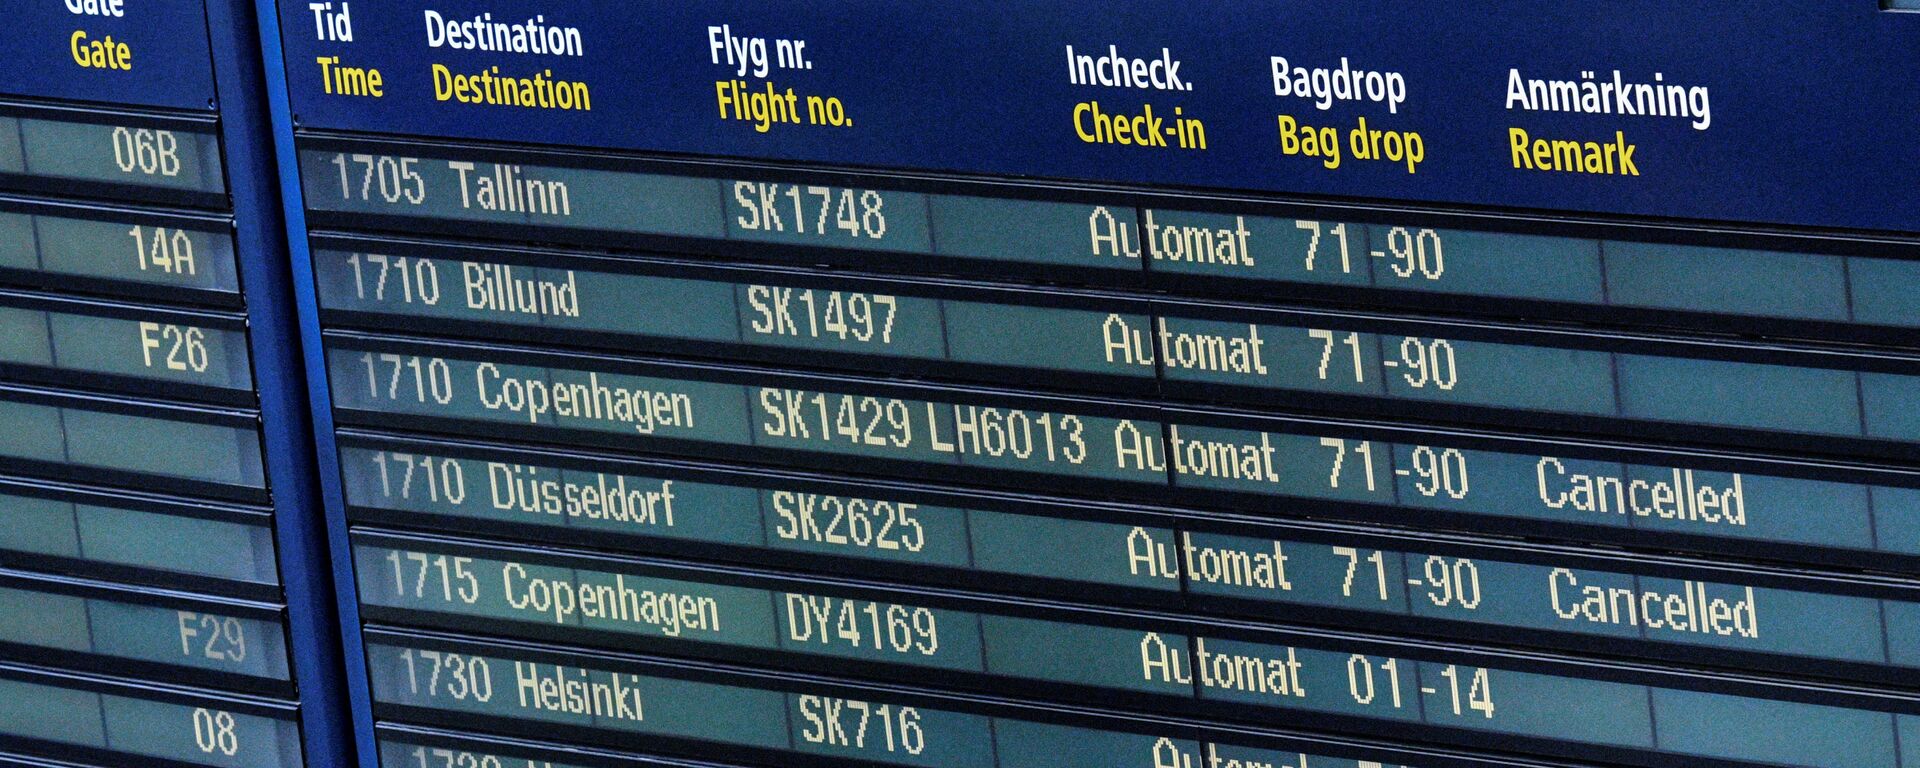 Cancelled SAS flights are seen on the information board at Arlanda airport, Sweden, June 13, 2016. - Sputnik International, 1920, 01.11.2021